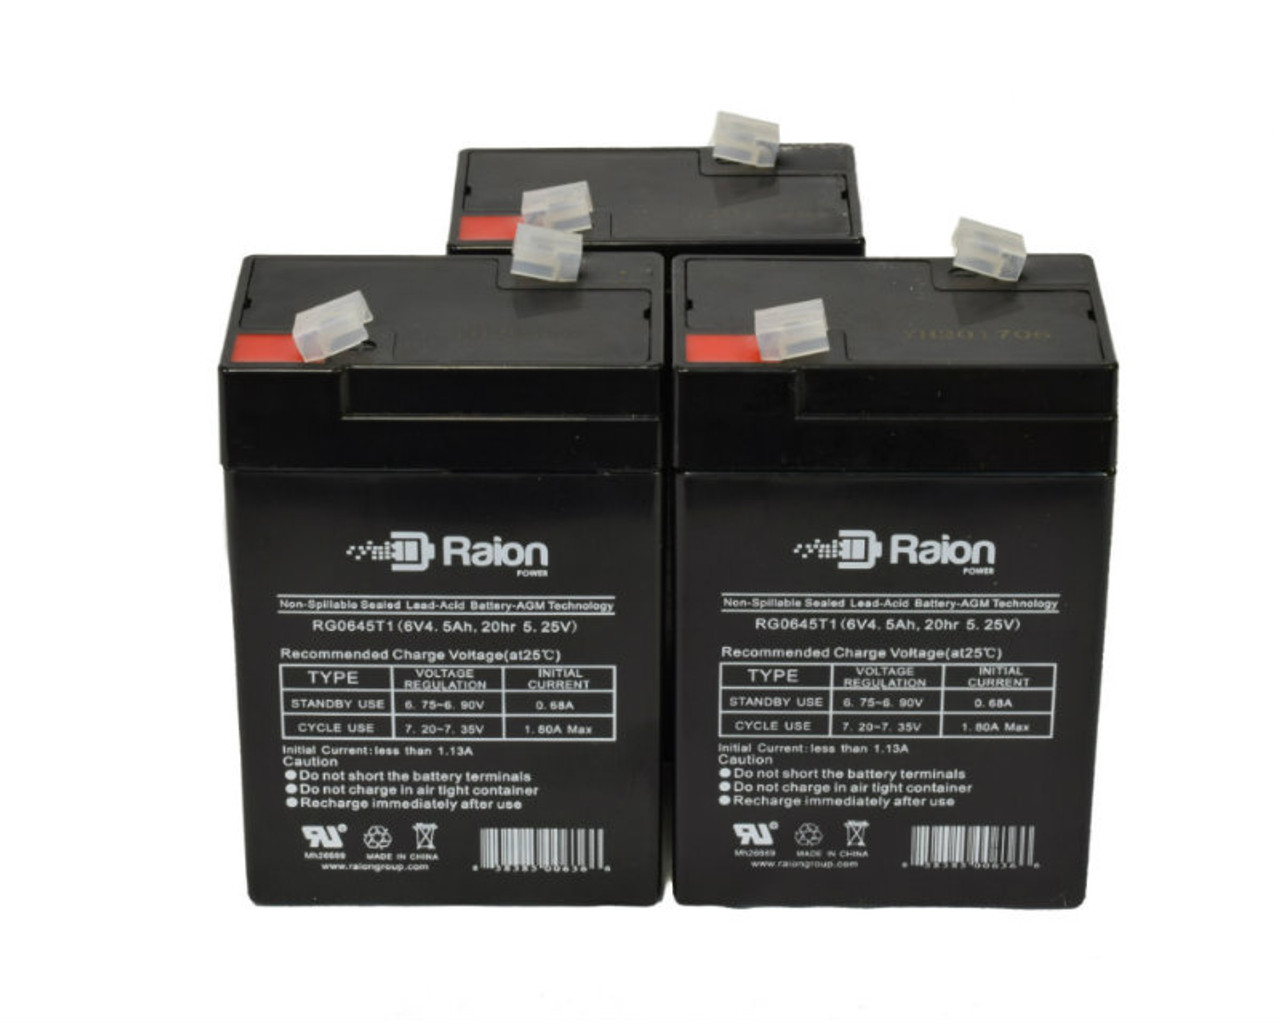 Raion Power 6V 4.5Ah Replacement Emergency Light Battery for Light Alarms CE15BK - 3 Pack